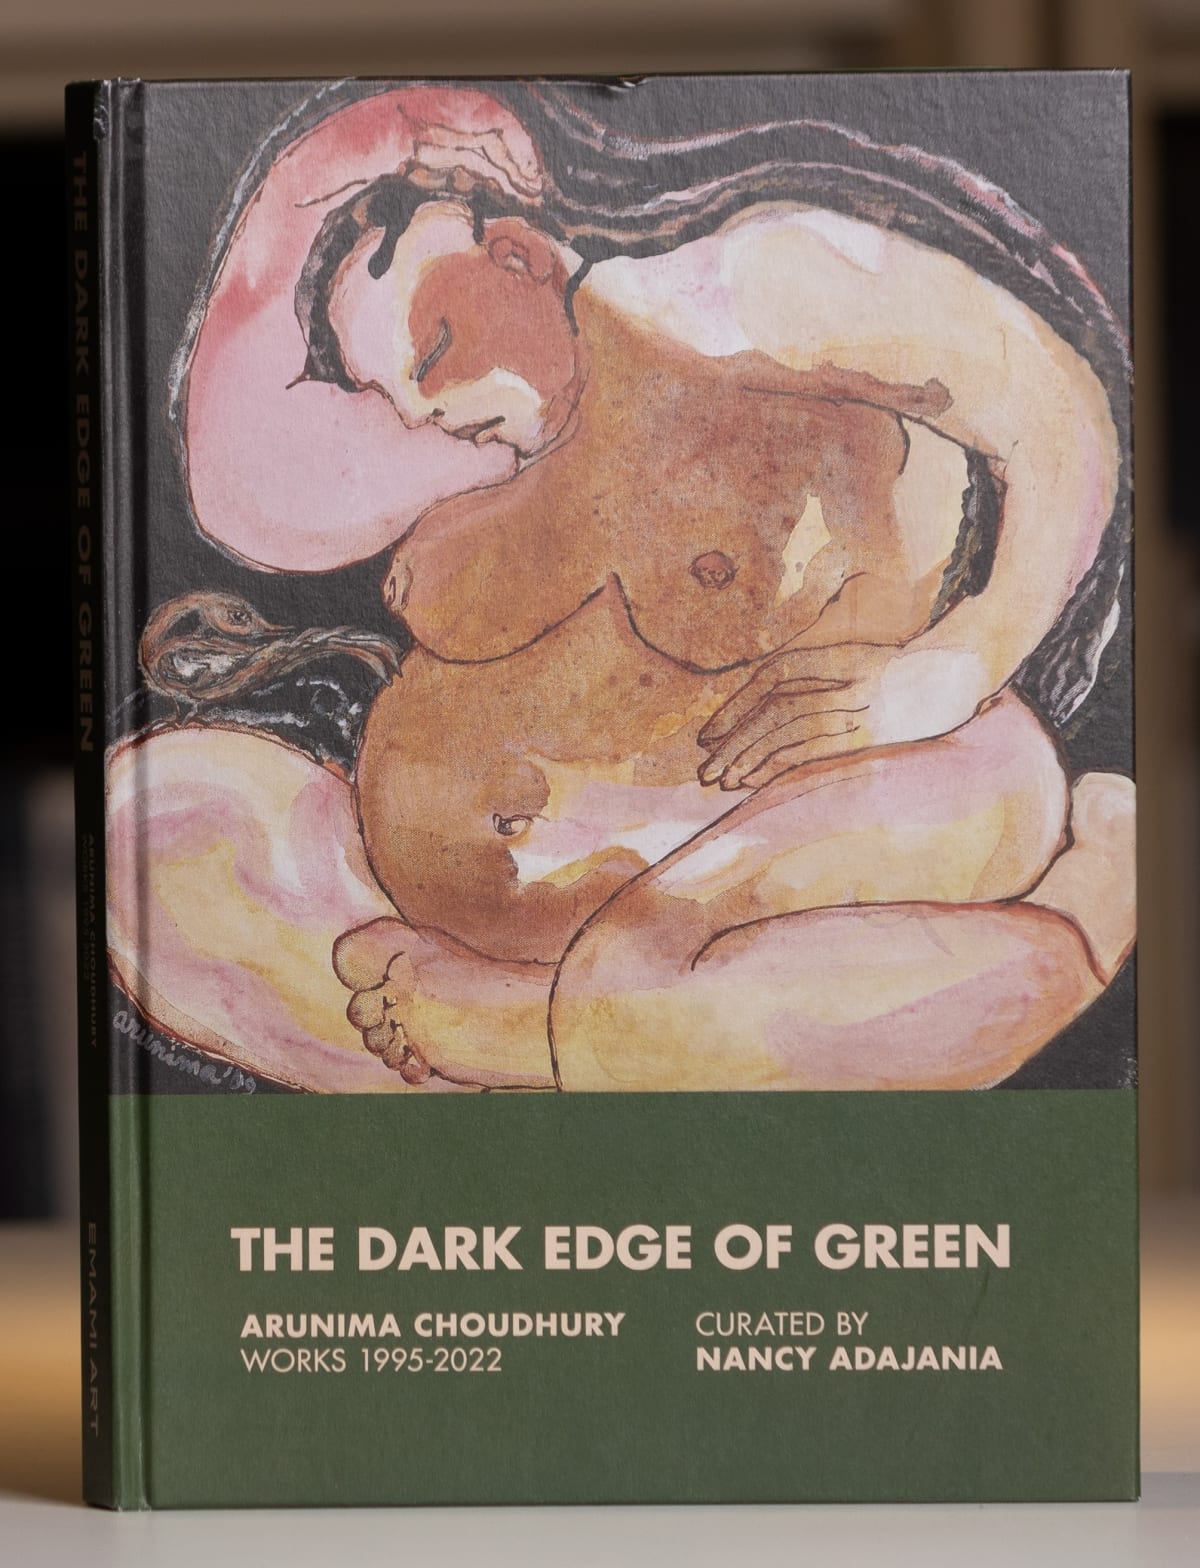 The Dark Edge of Green-Arunima Choudhury (Works 1995-2022)